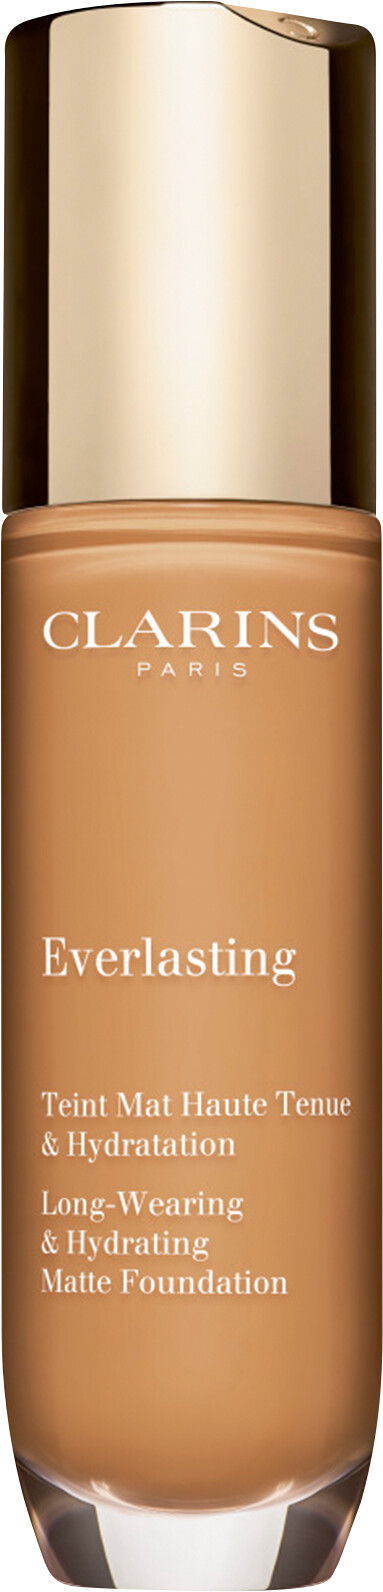 Clarins Everlasting Long-Wearing & Hydrating Matte Foundation 30ml 115C - Cognac